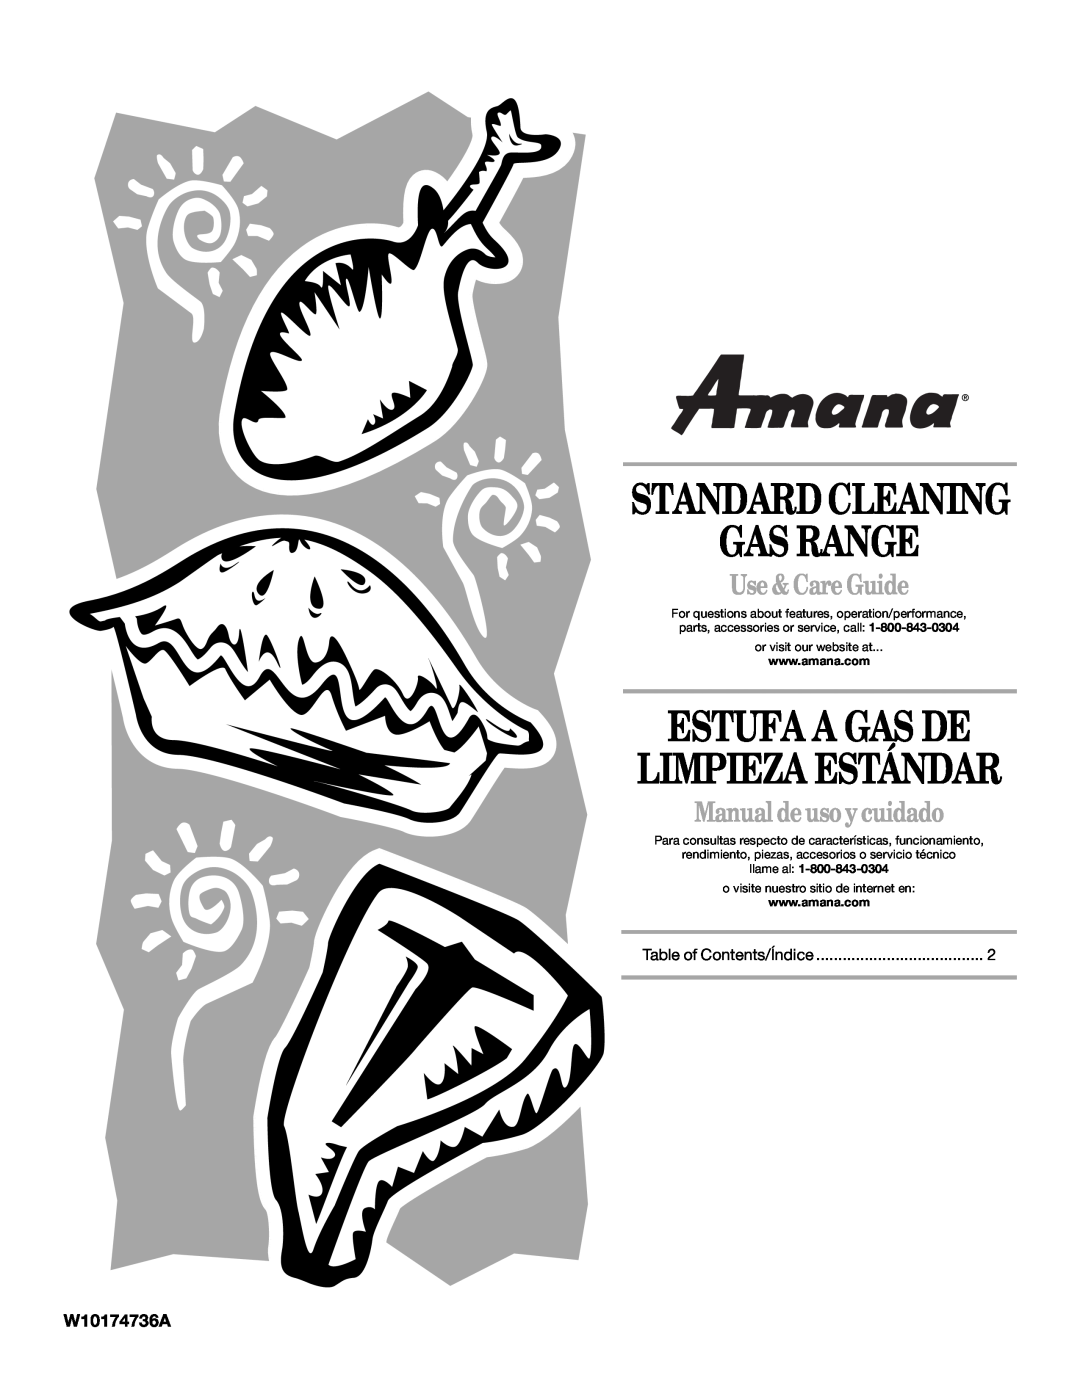 Amana AGR4422VDW manual Standard Cleaning Gas Range, Estufa A Gas De, Limpieza Estándar, Use & Care Guide, W10174736A 